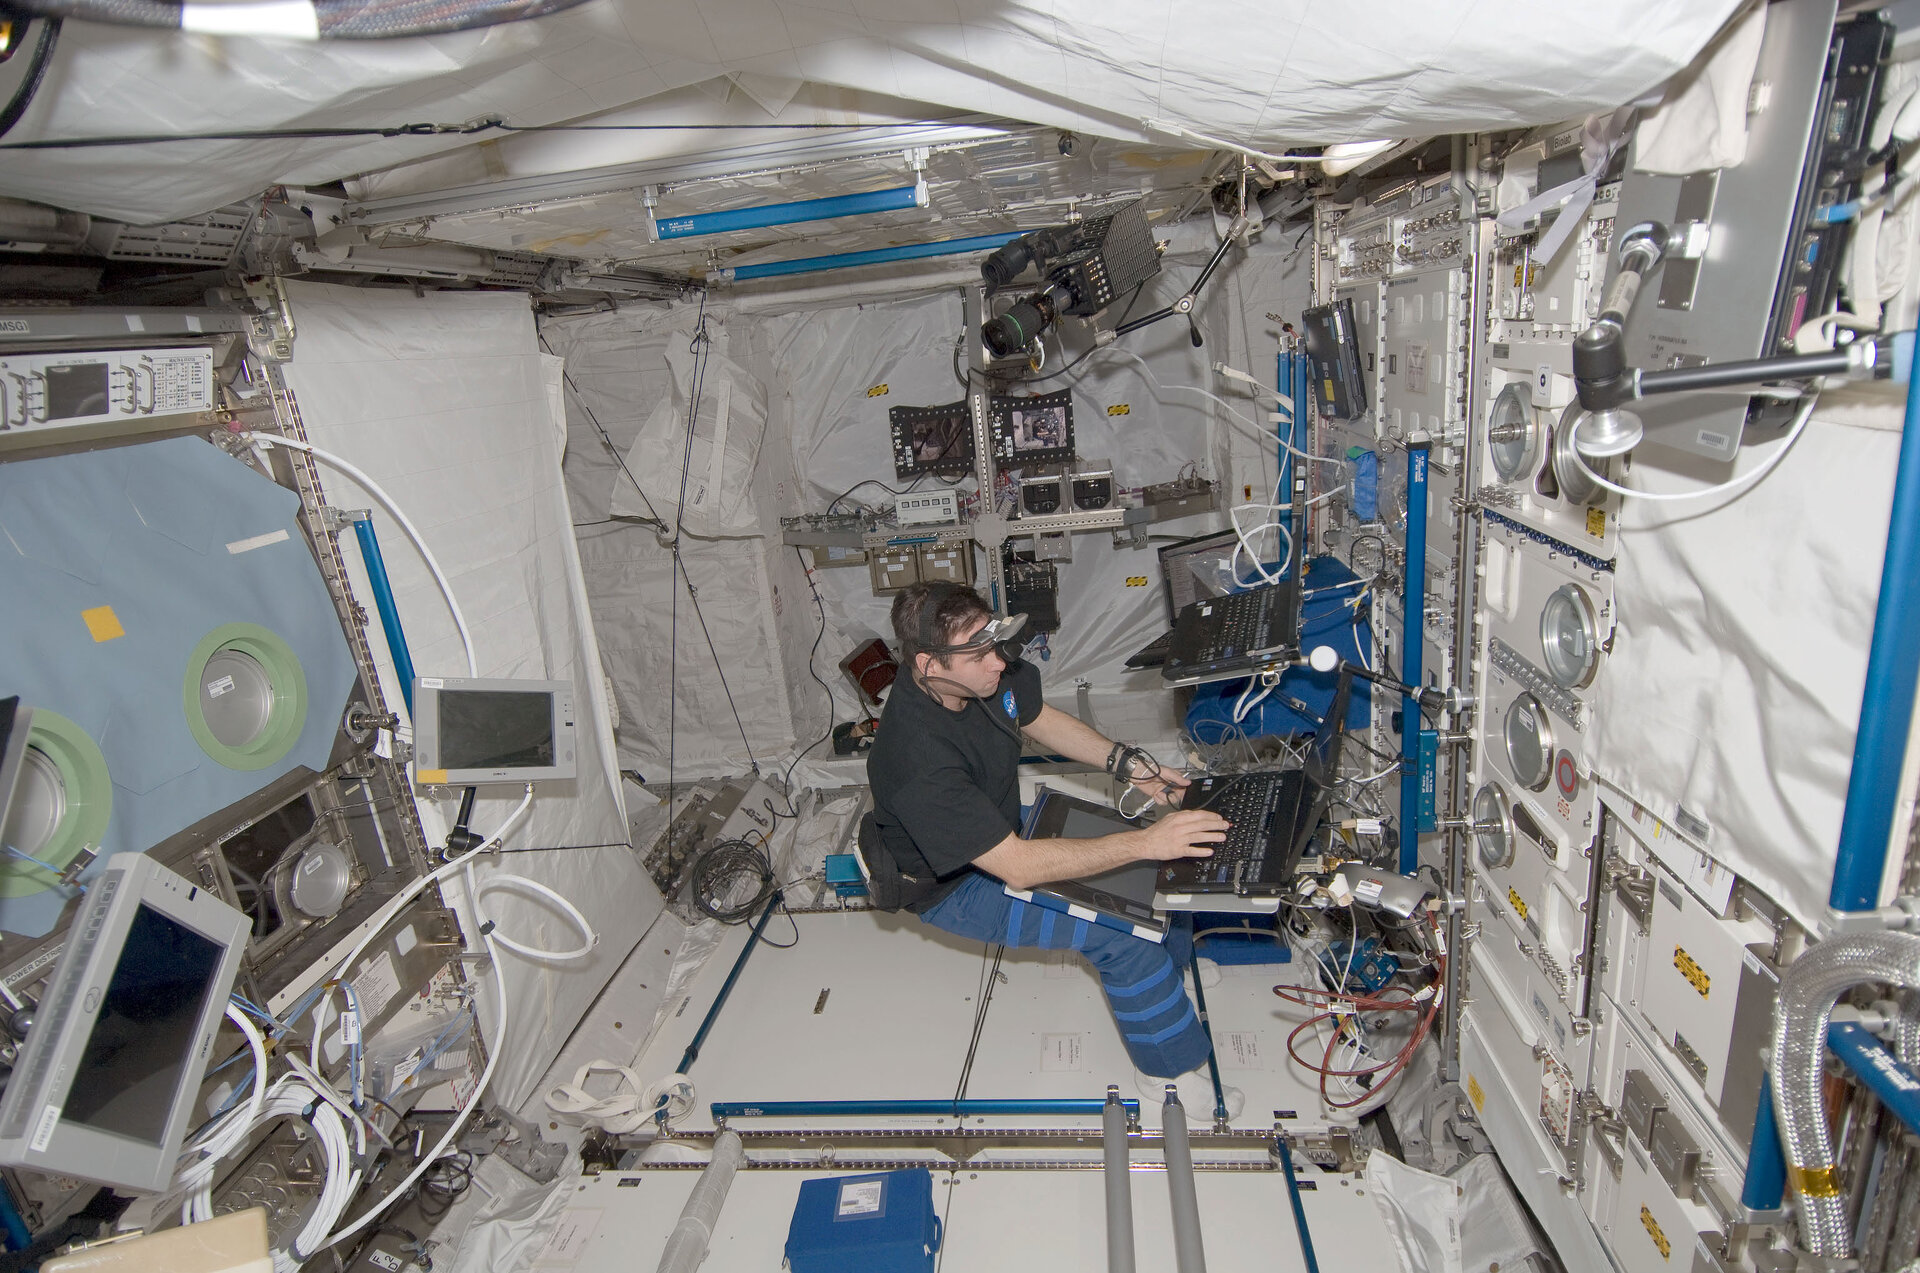 Astronaut Gregory Chamitoff prepares experiment inside Columbus